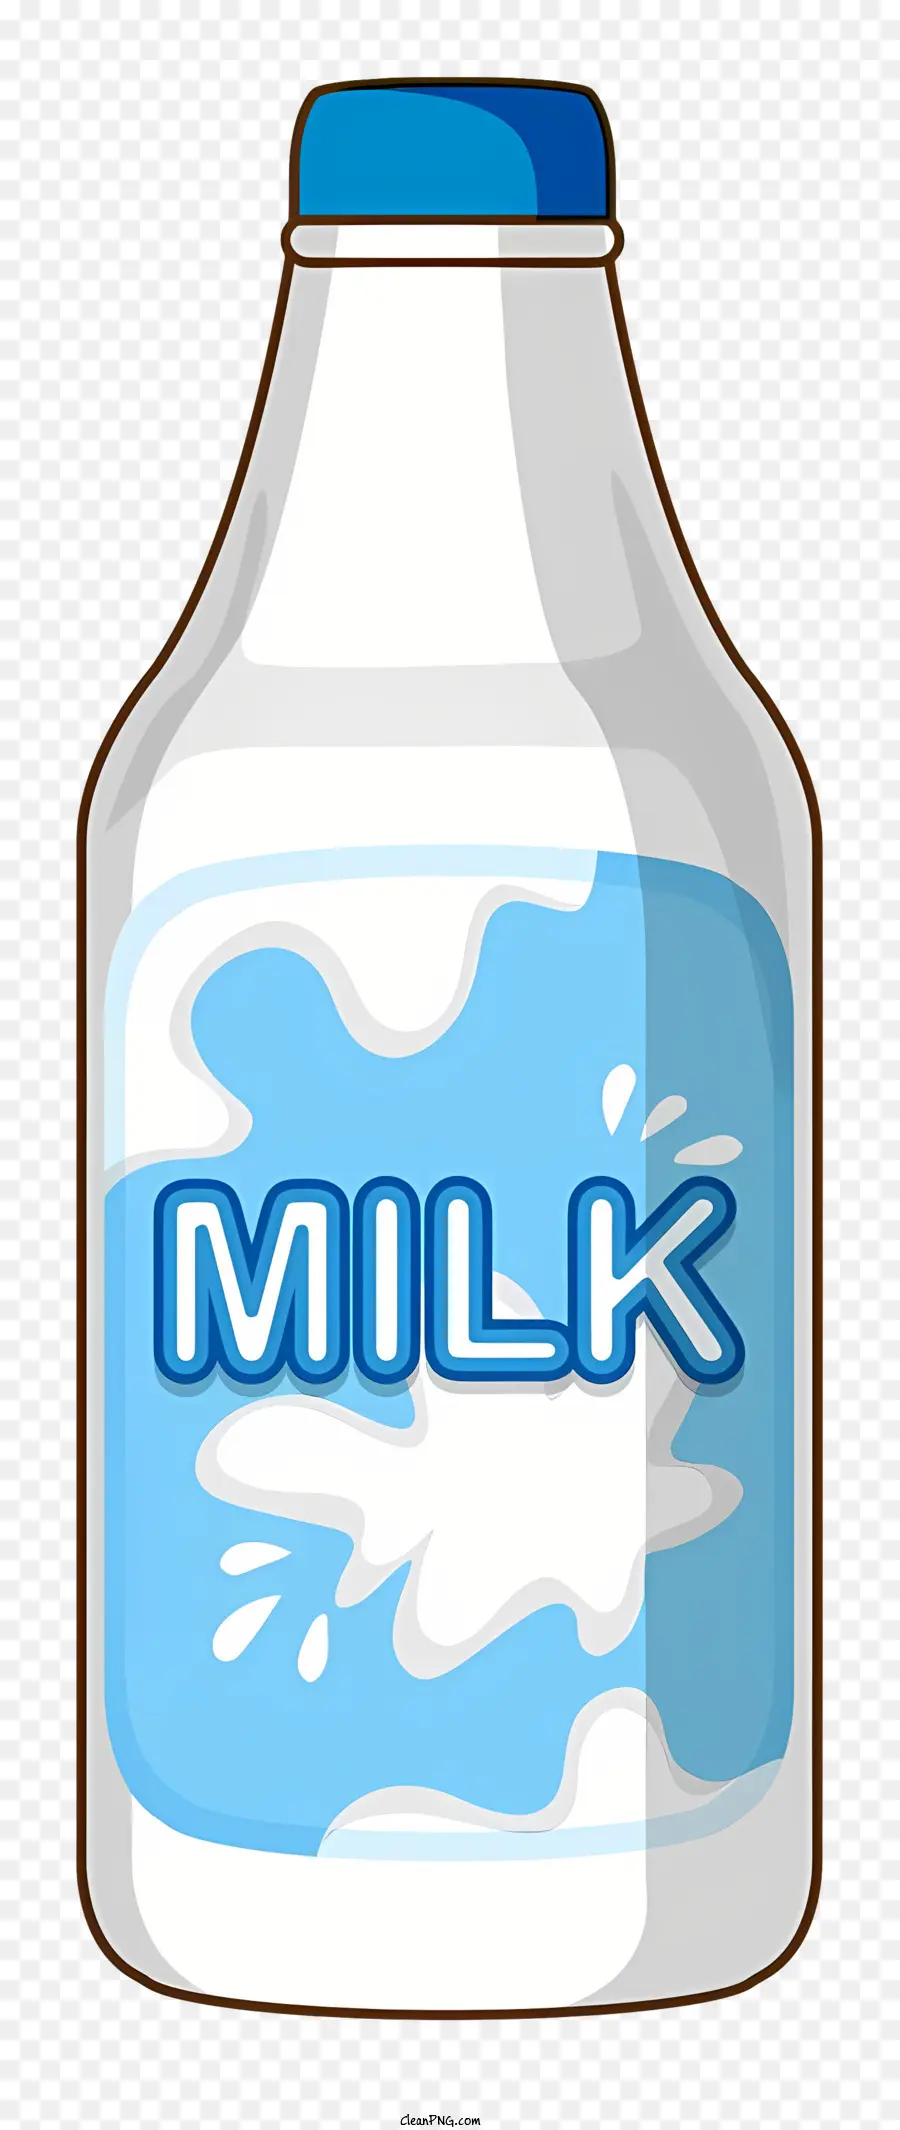 milk bottle blue top milk bottle cartoon milk bottle plastic milk bottle transparent milk bottle